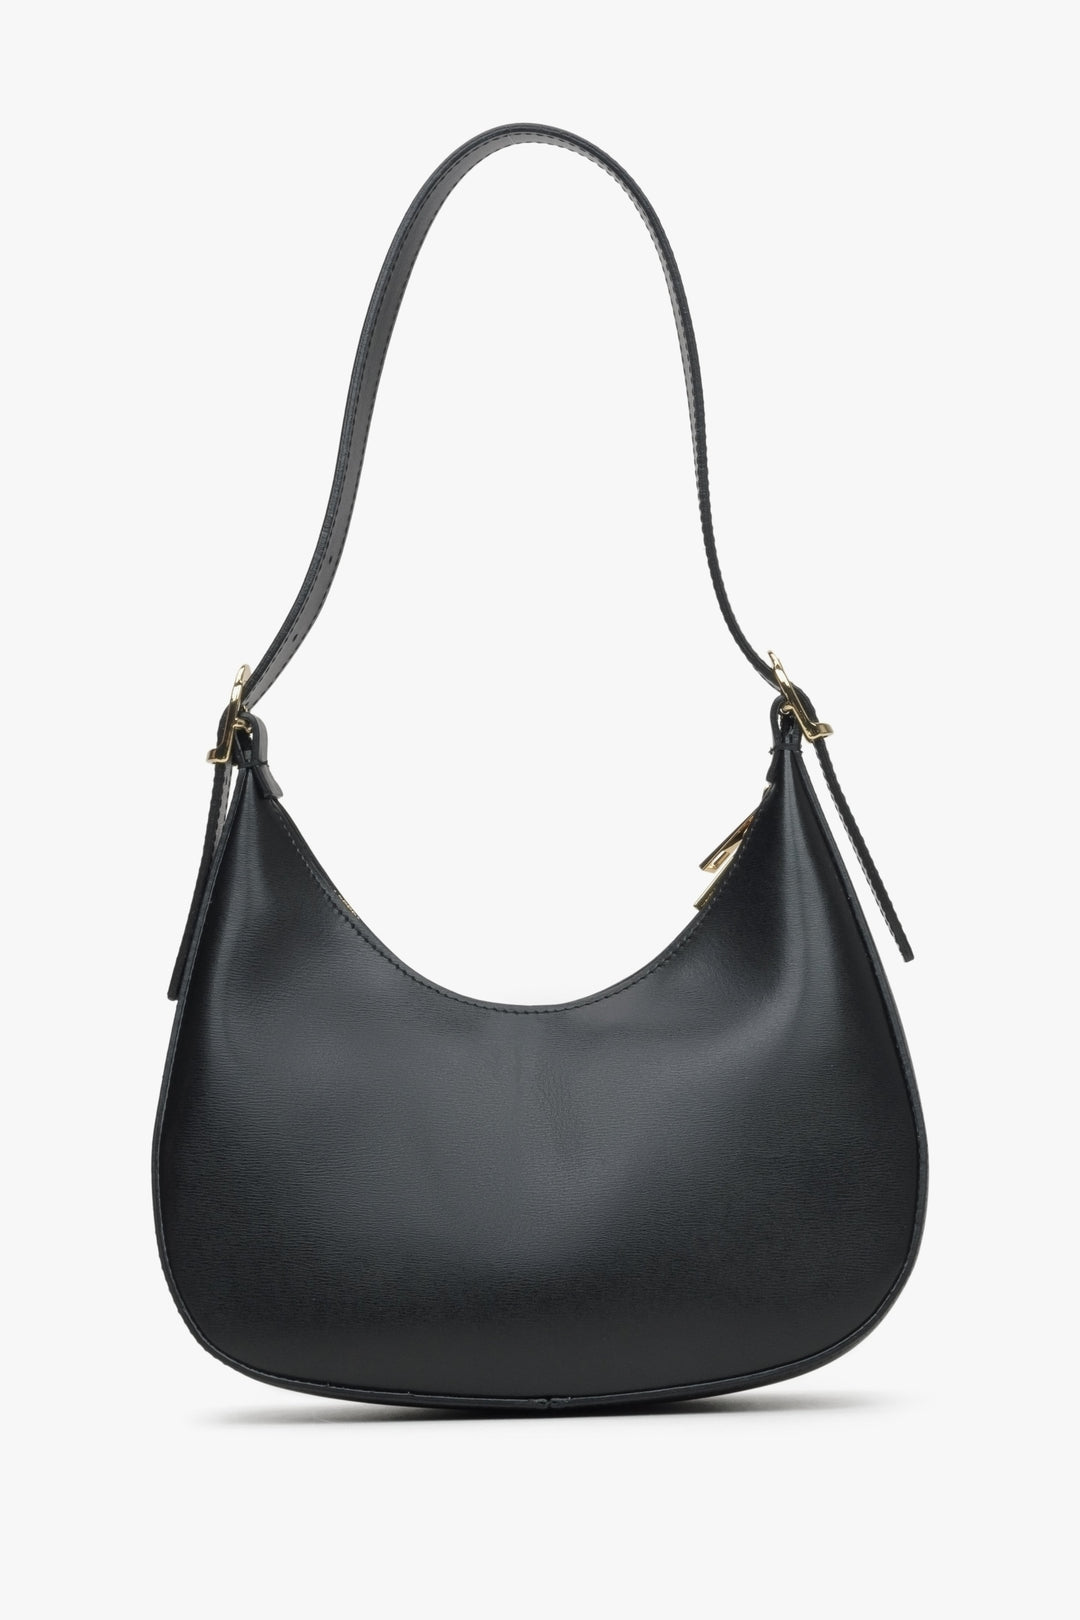 Women's black Estro handbag made of Italian genuine leather.